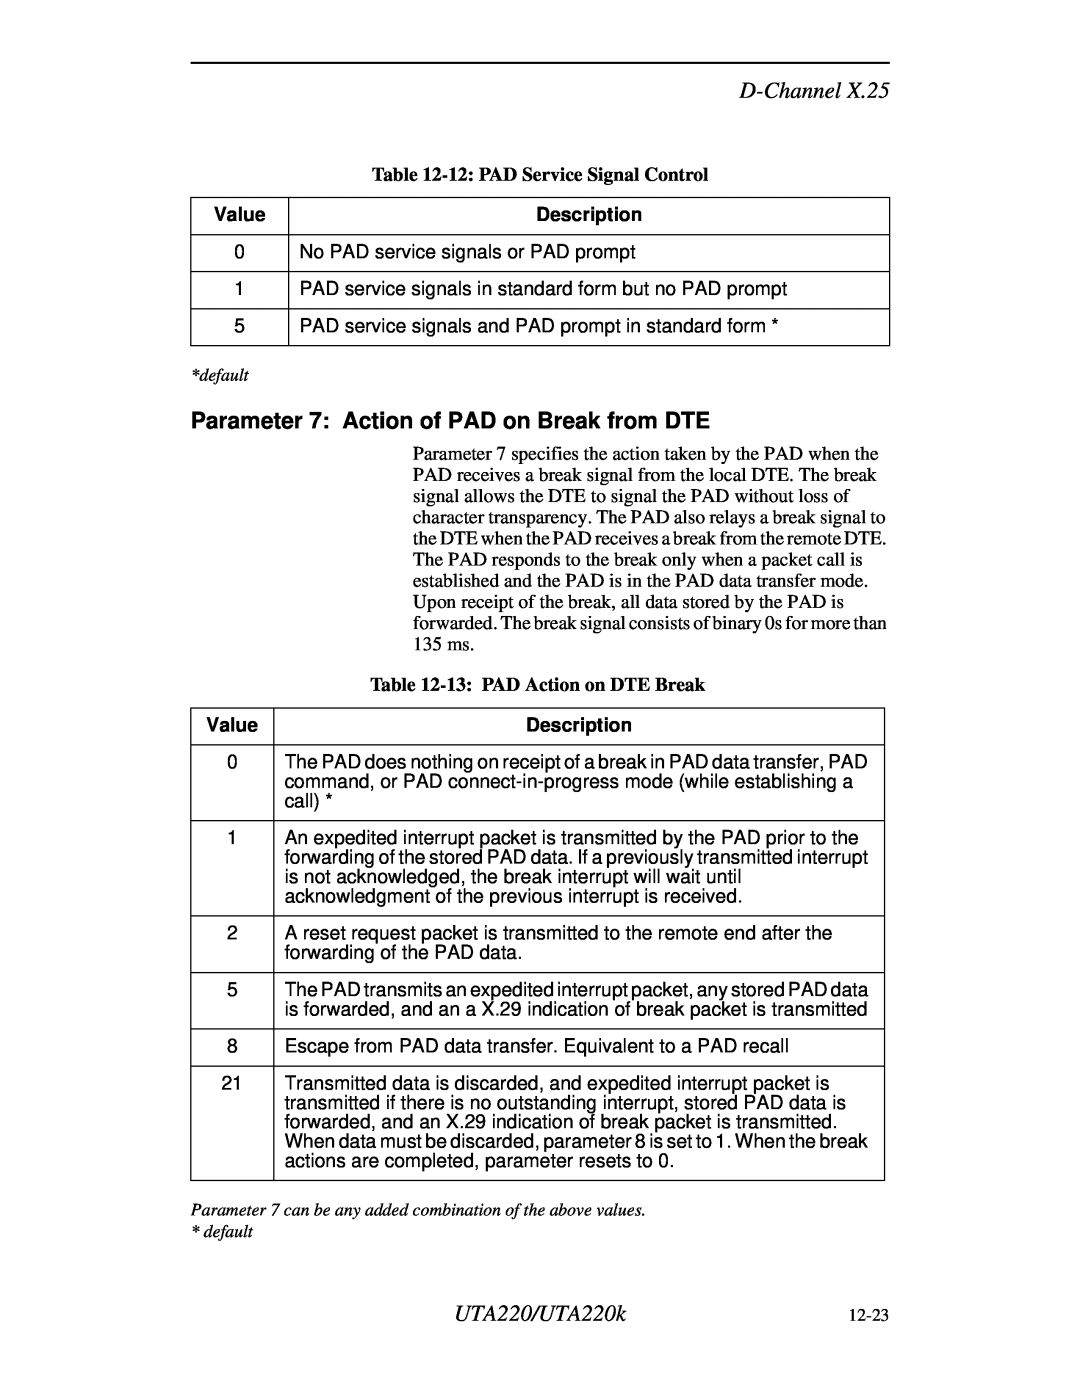 Northern UTA220/UTA220k manual Parameter 7 Action of PAD on Break from DTE, D-Channel, Value, Description 